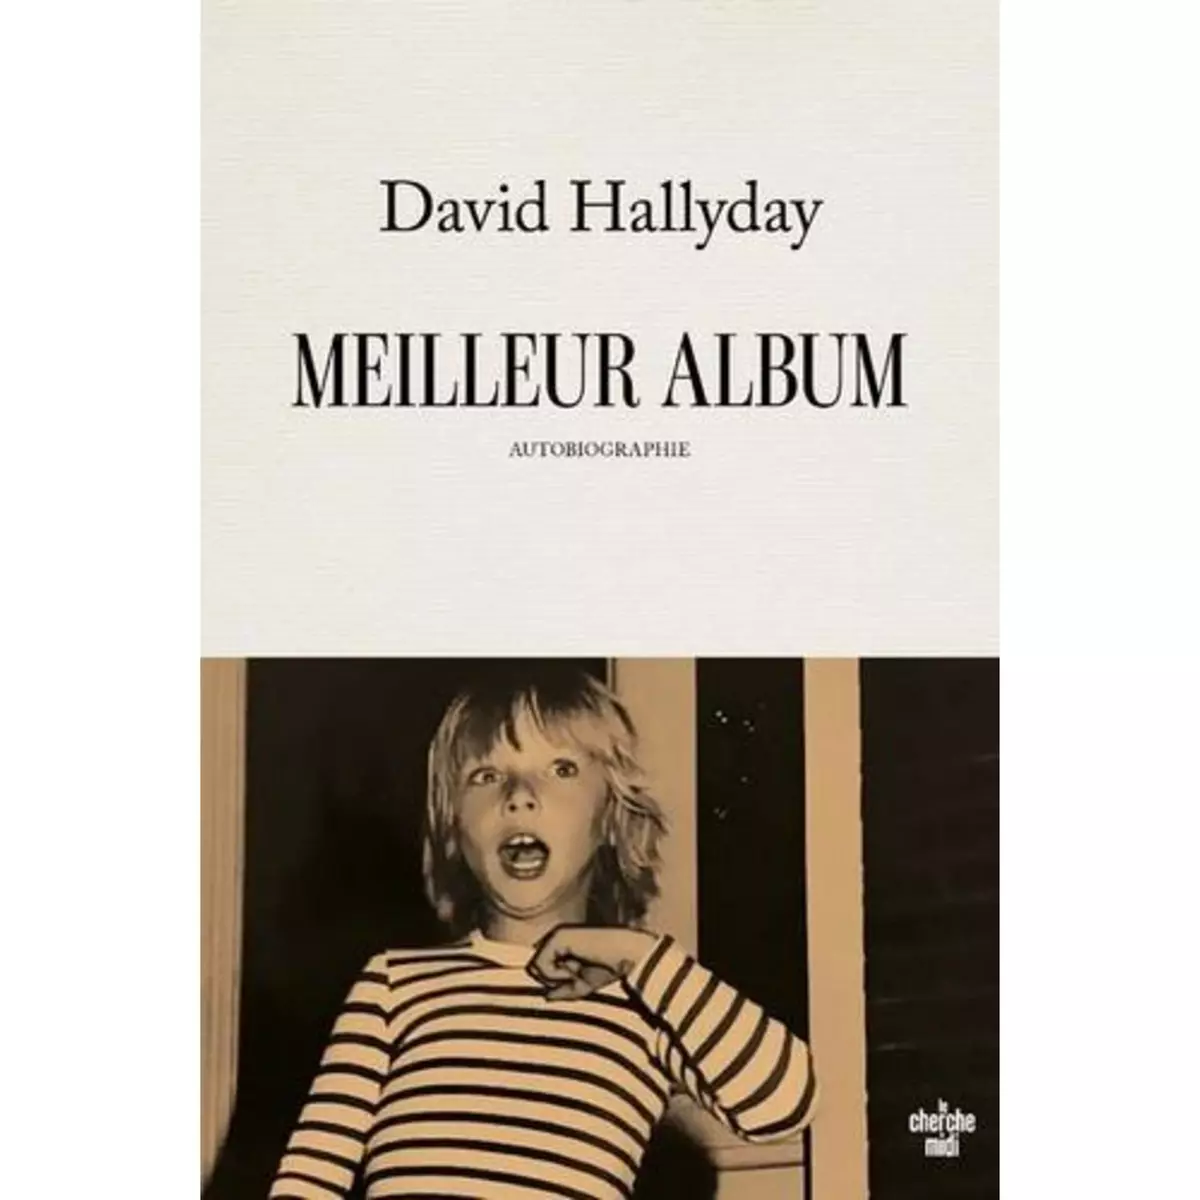  MEILLEUR ALBUM. AUTOBIOGRAPHIE, Hallyday David